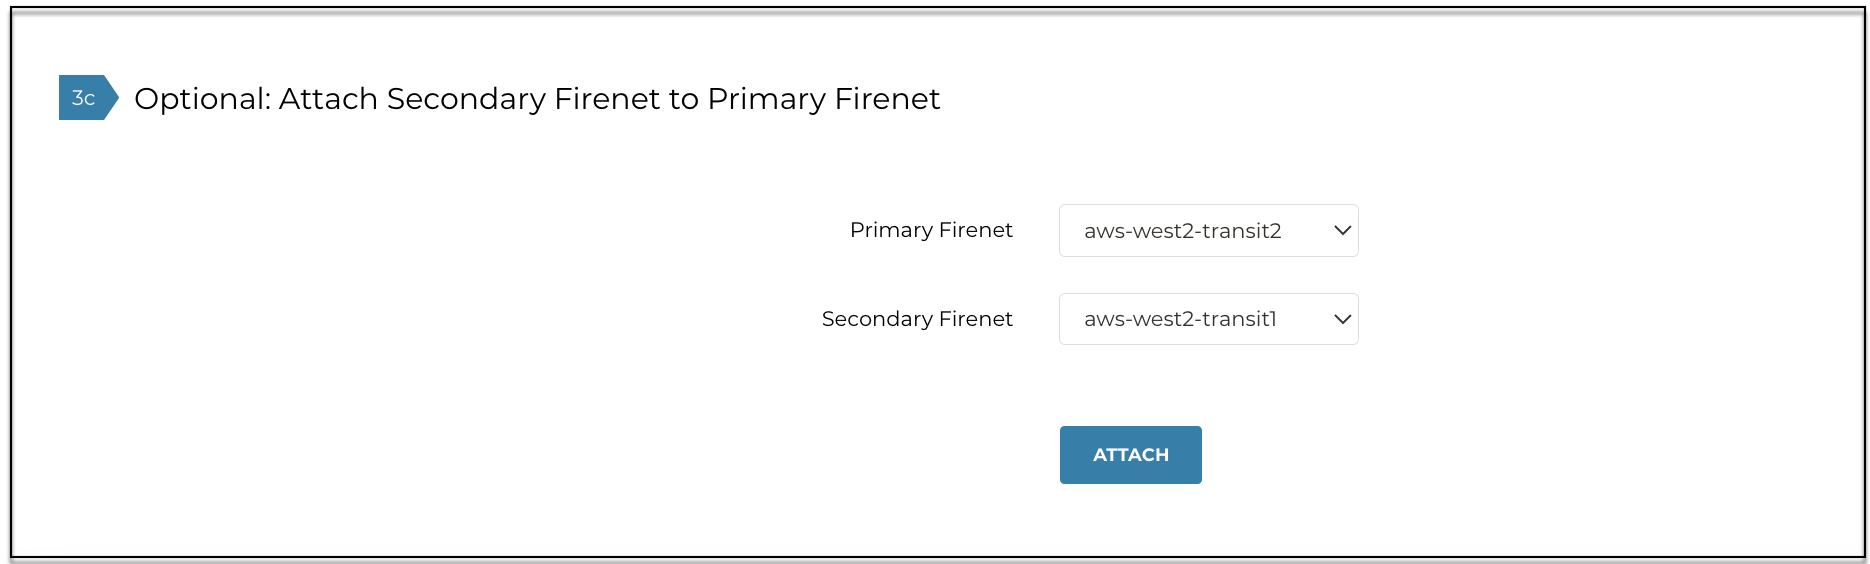 centralized firenet